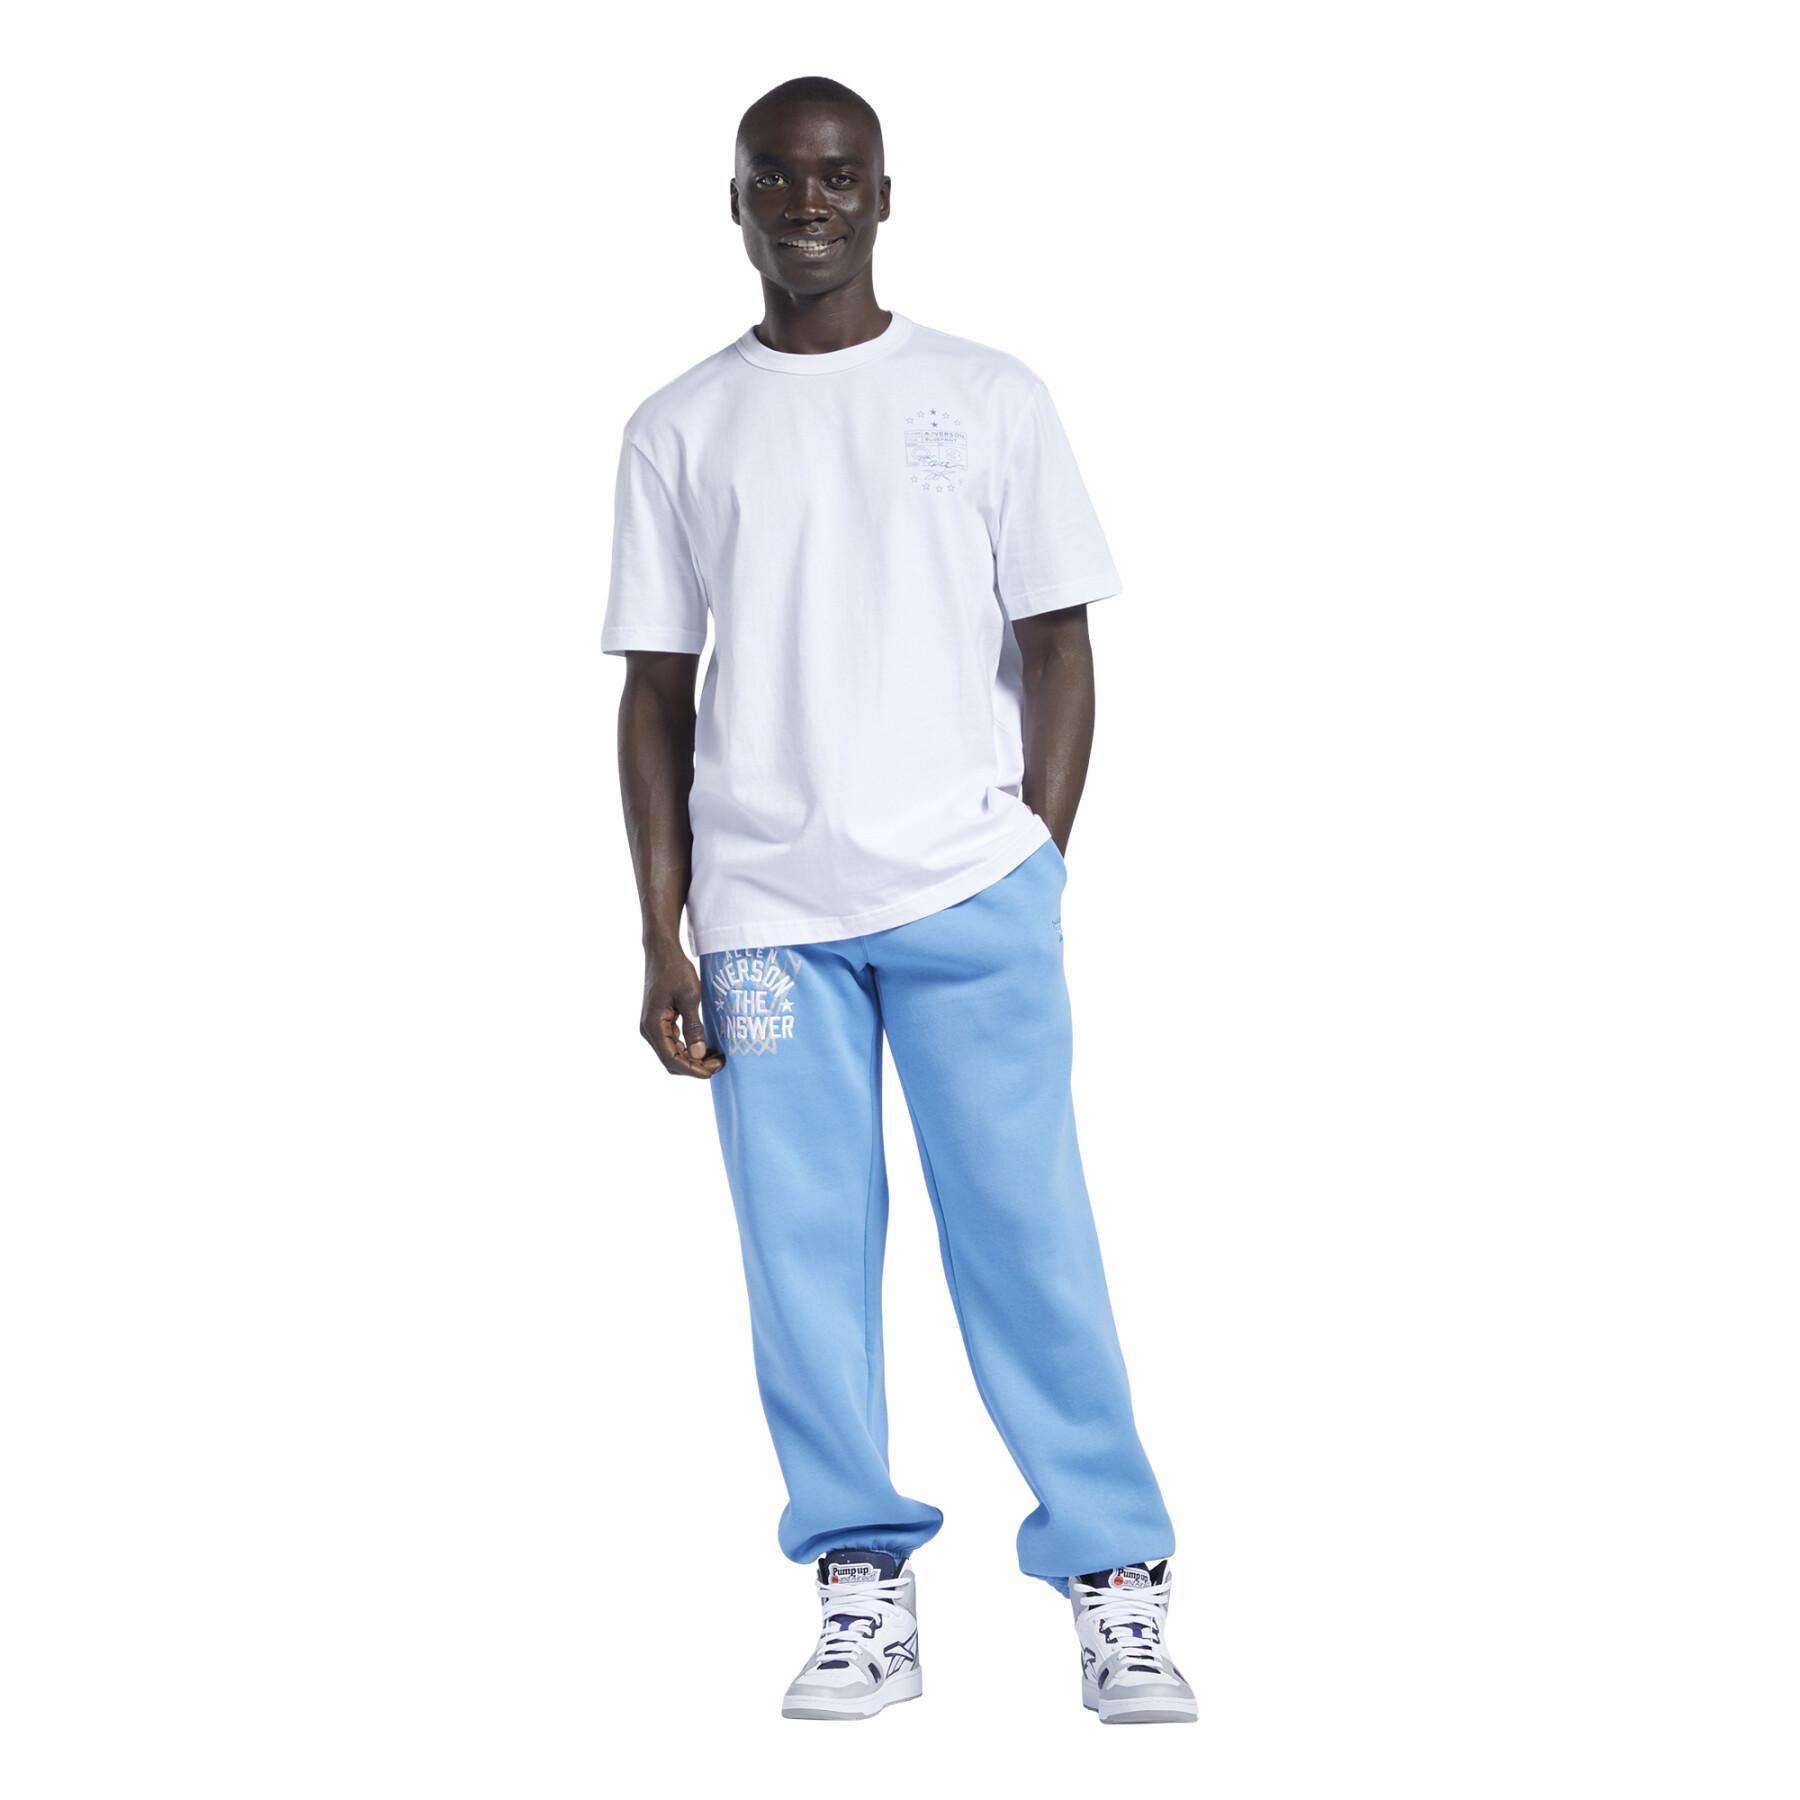 Koszulka Reebok Iverson Basketball I3 Blueprint Sleeve